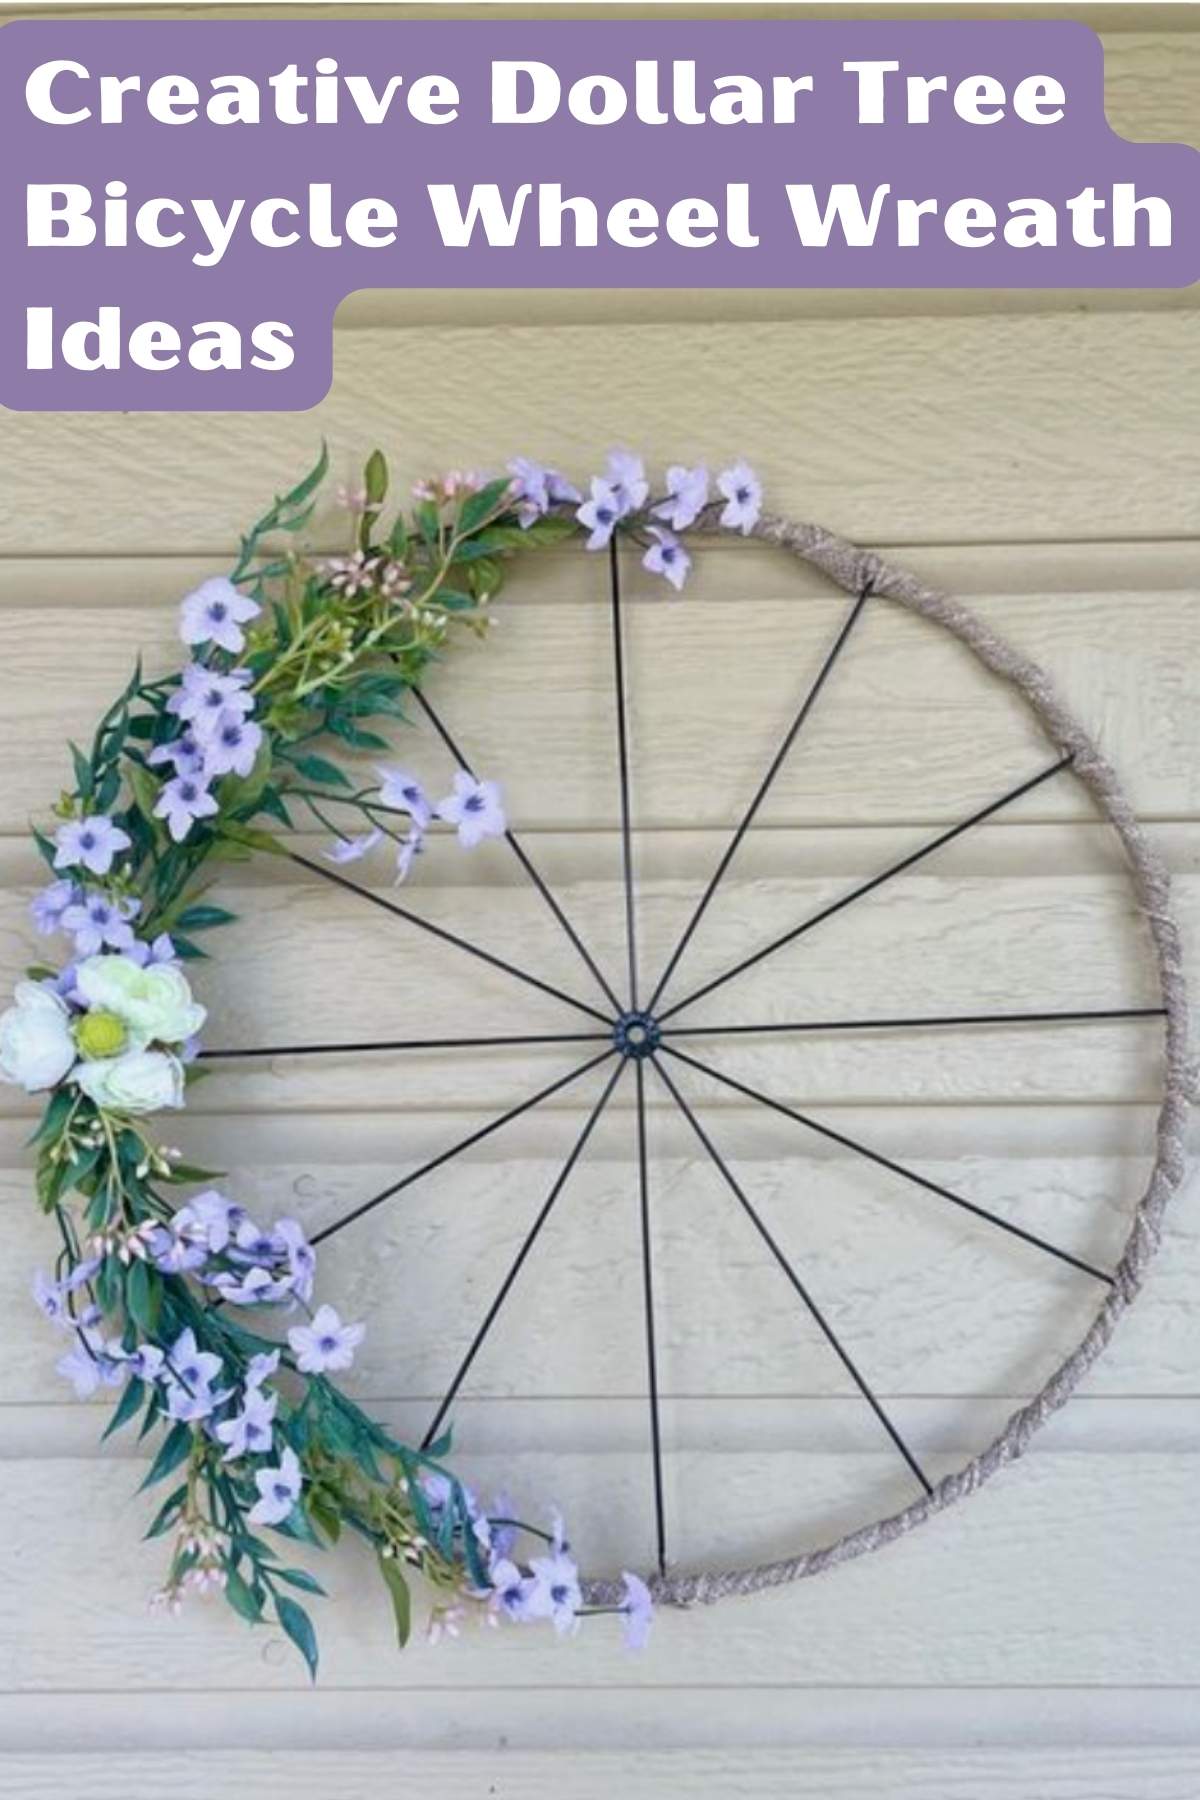 Creative Dollar Tree Bicycle Wheel Wreath Ideas. Photo of cute floral flower bike wheel.